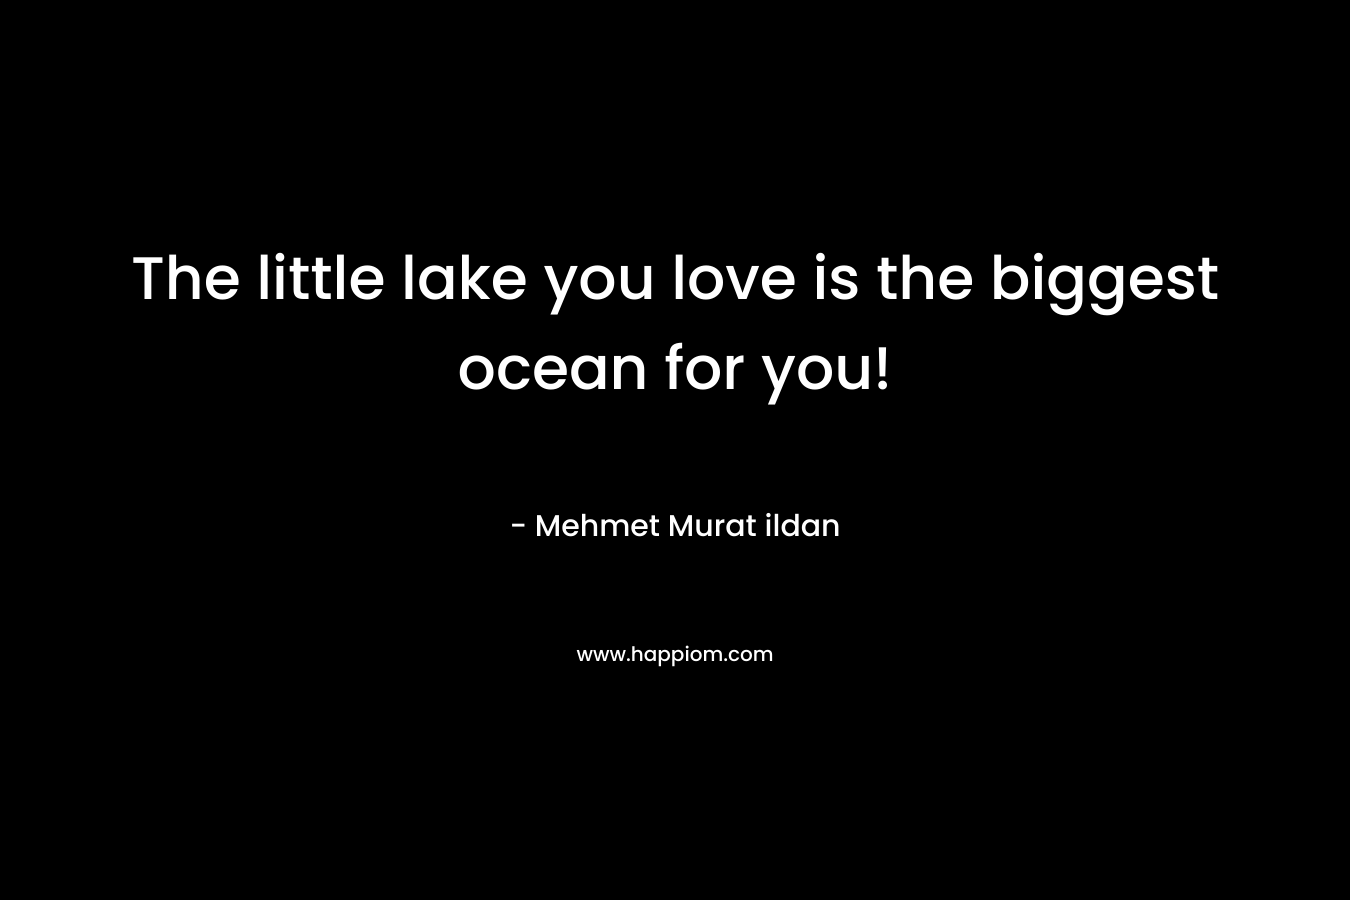 The little lake you love is the biggest ocean for you! – Mehmet Murat ildan